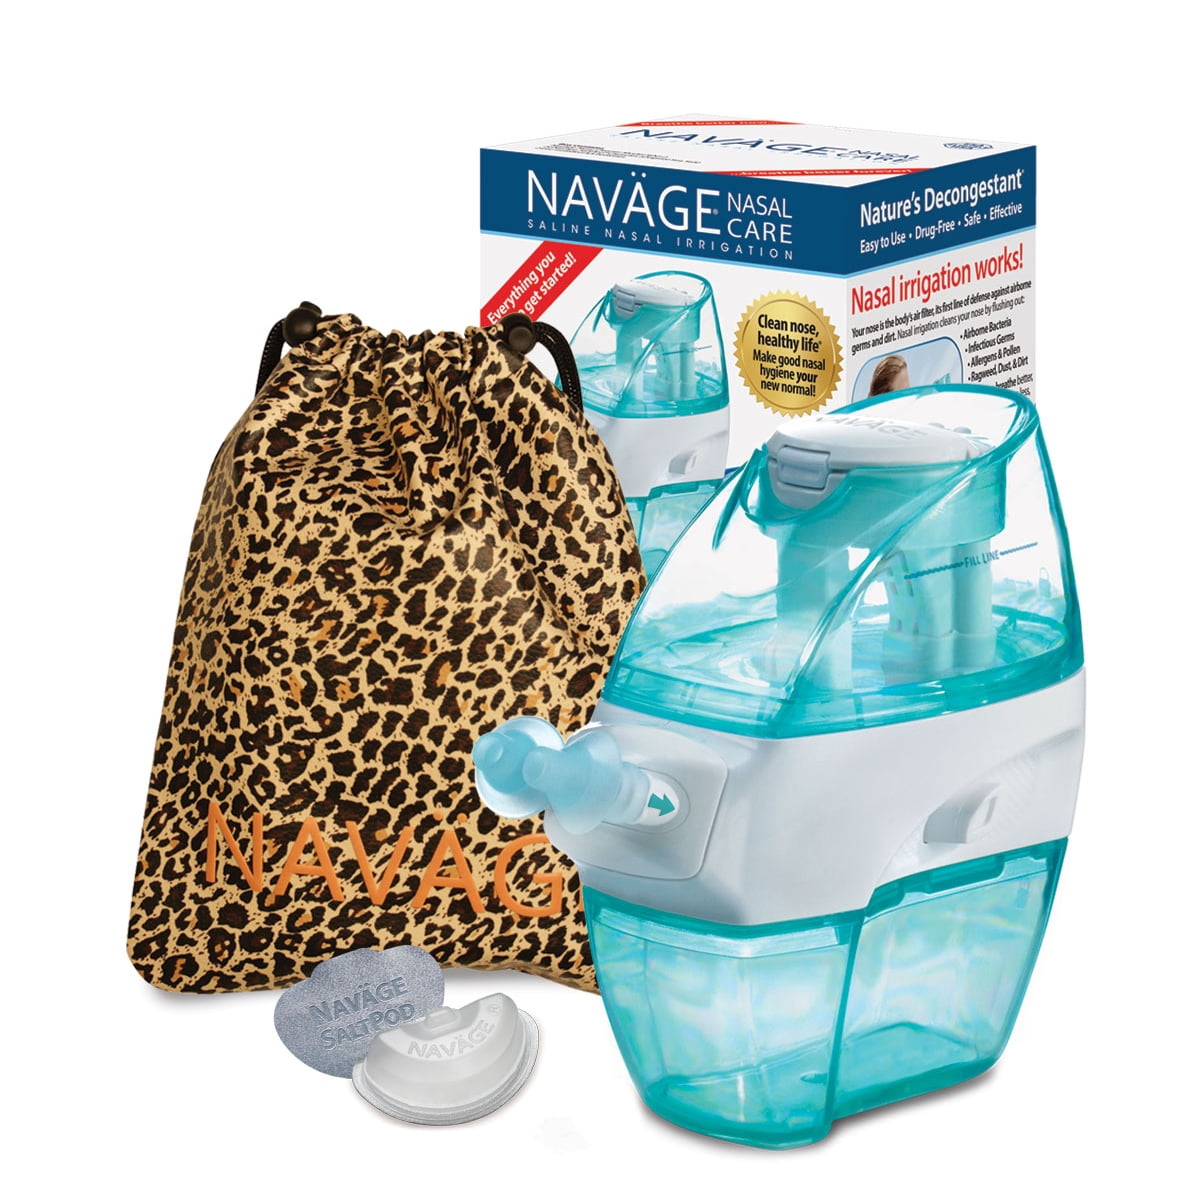 Navage Nasal Care TRAVEL Bundle: Navage Nose Cleaner, Leopard